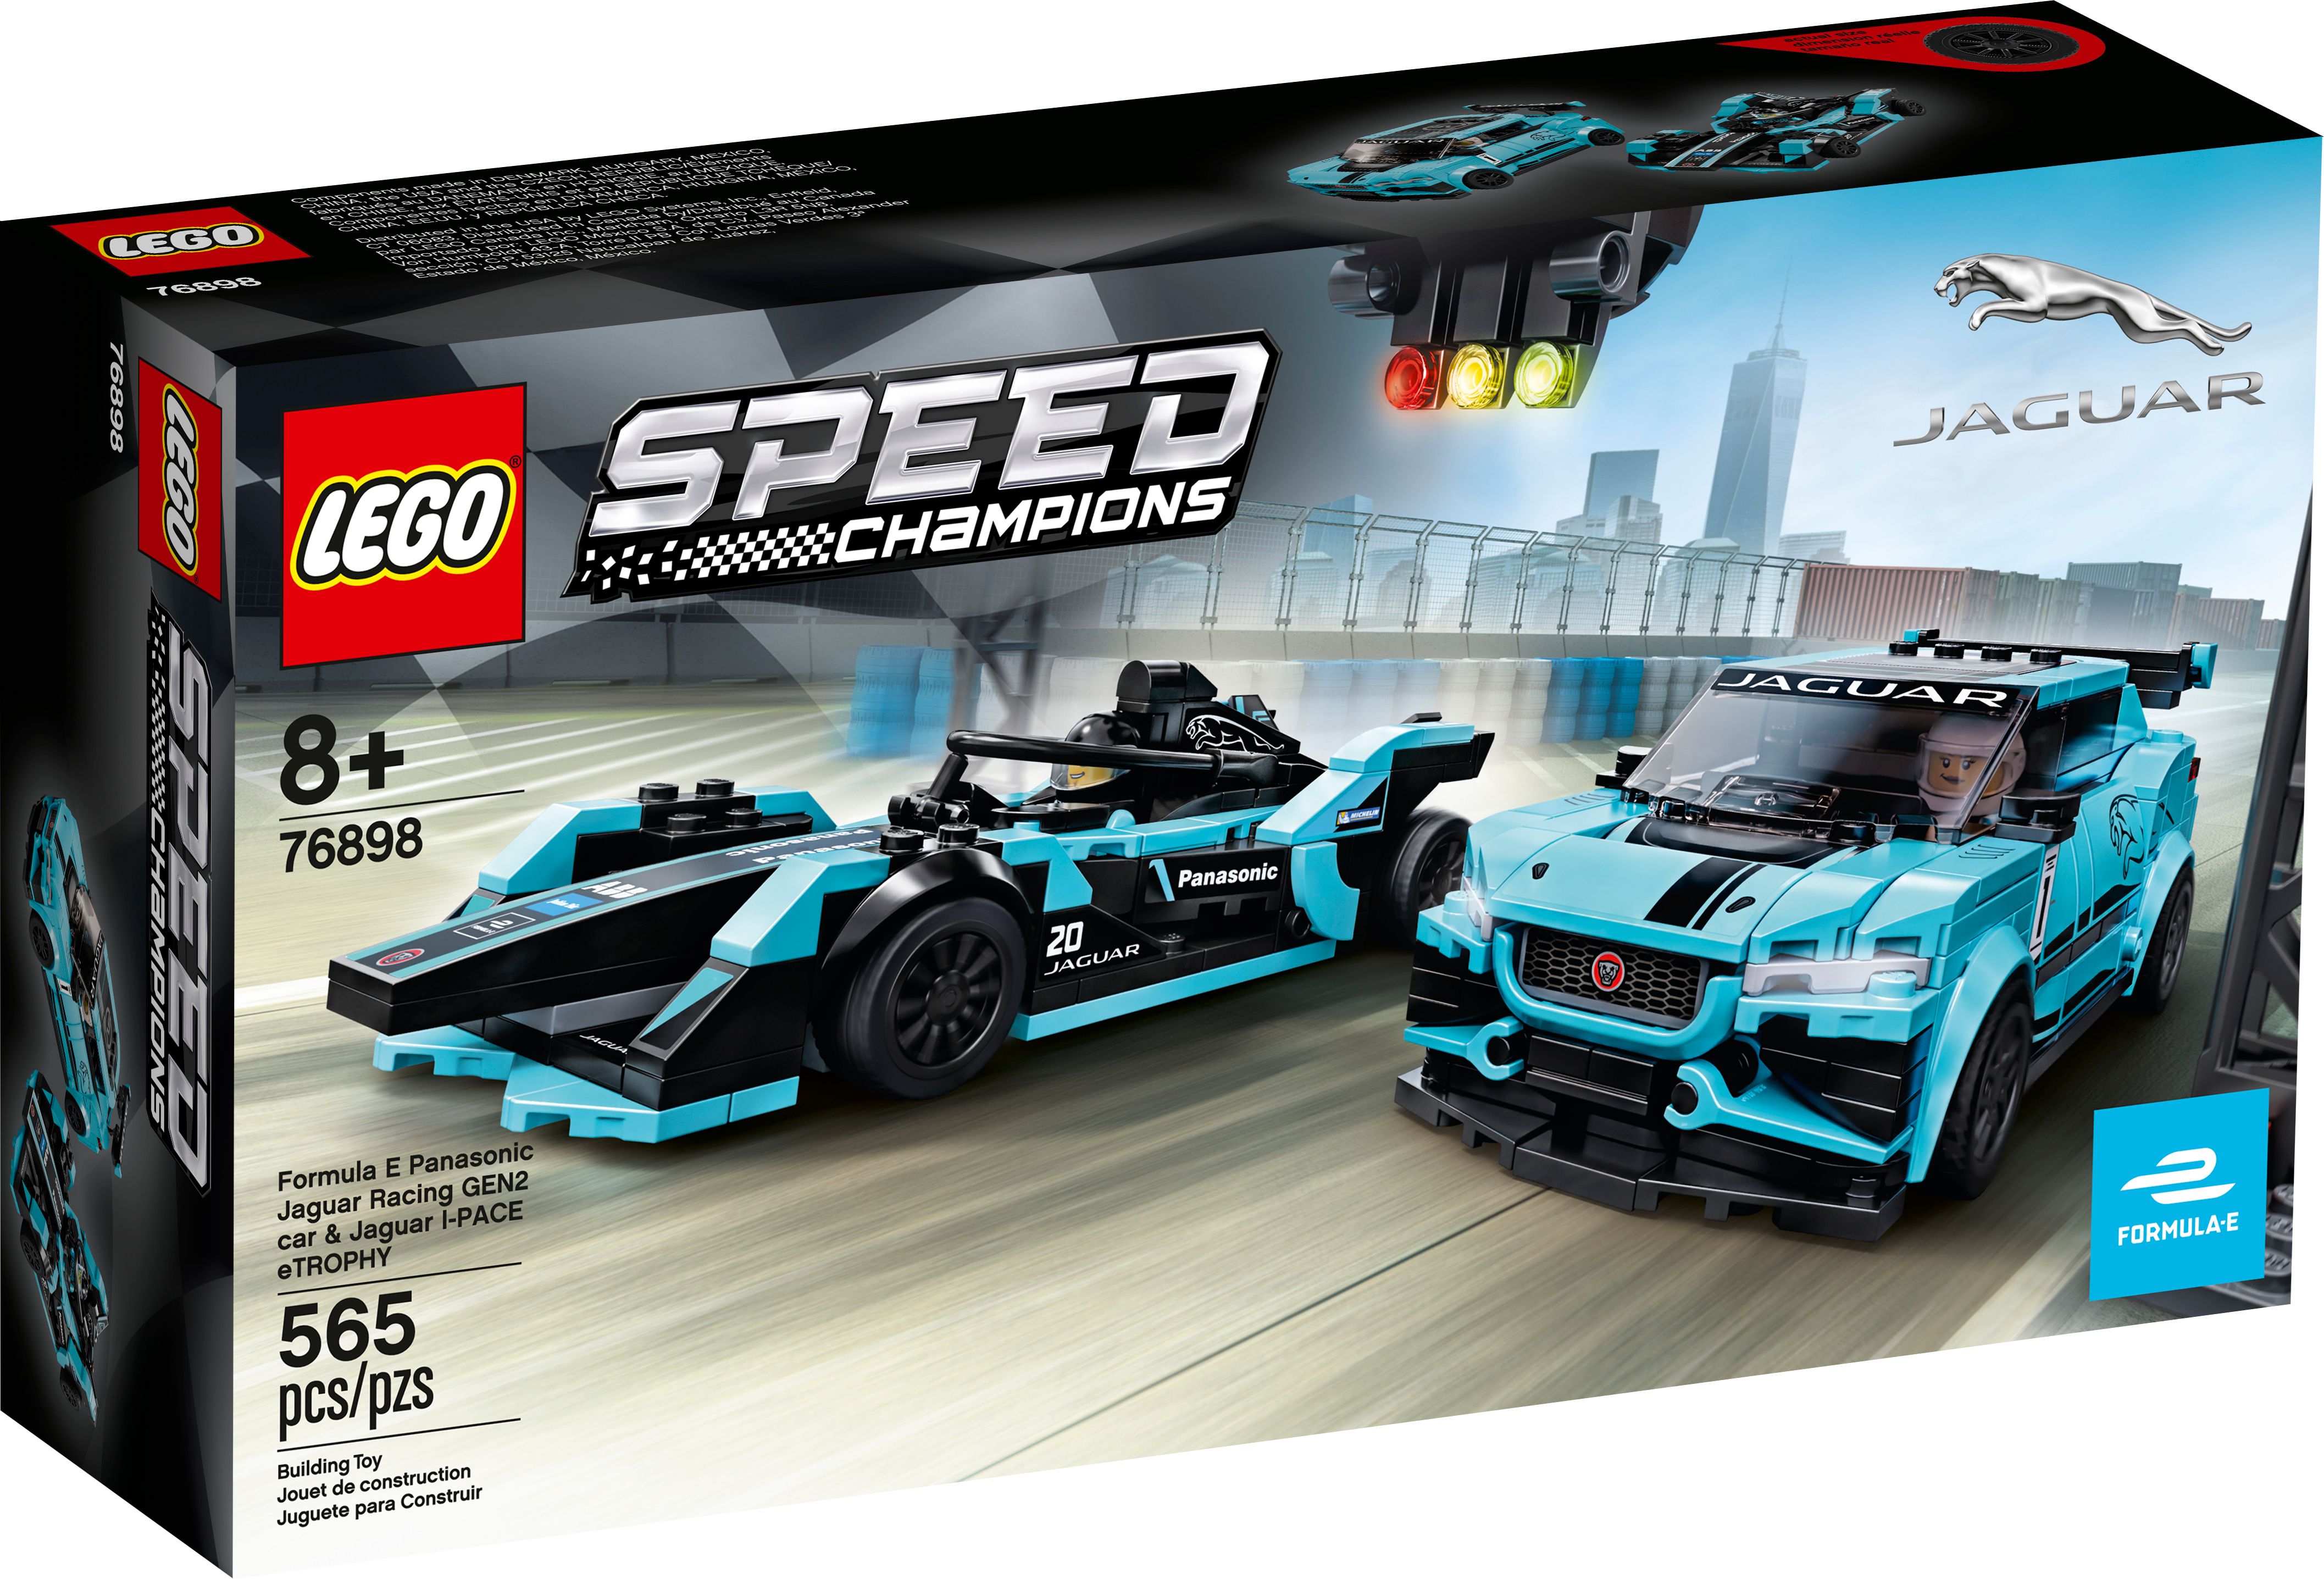 LEGO Speed Champions Formula E Panasonic Jaguar Racing Gen2 car & I-PACE eTROPHY 76898 Building Kit - image 5 of 8